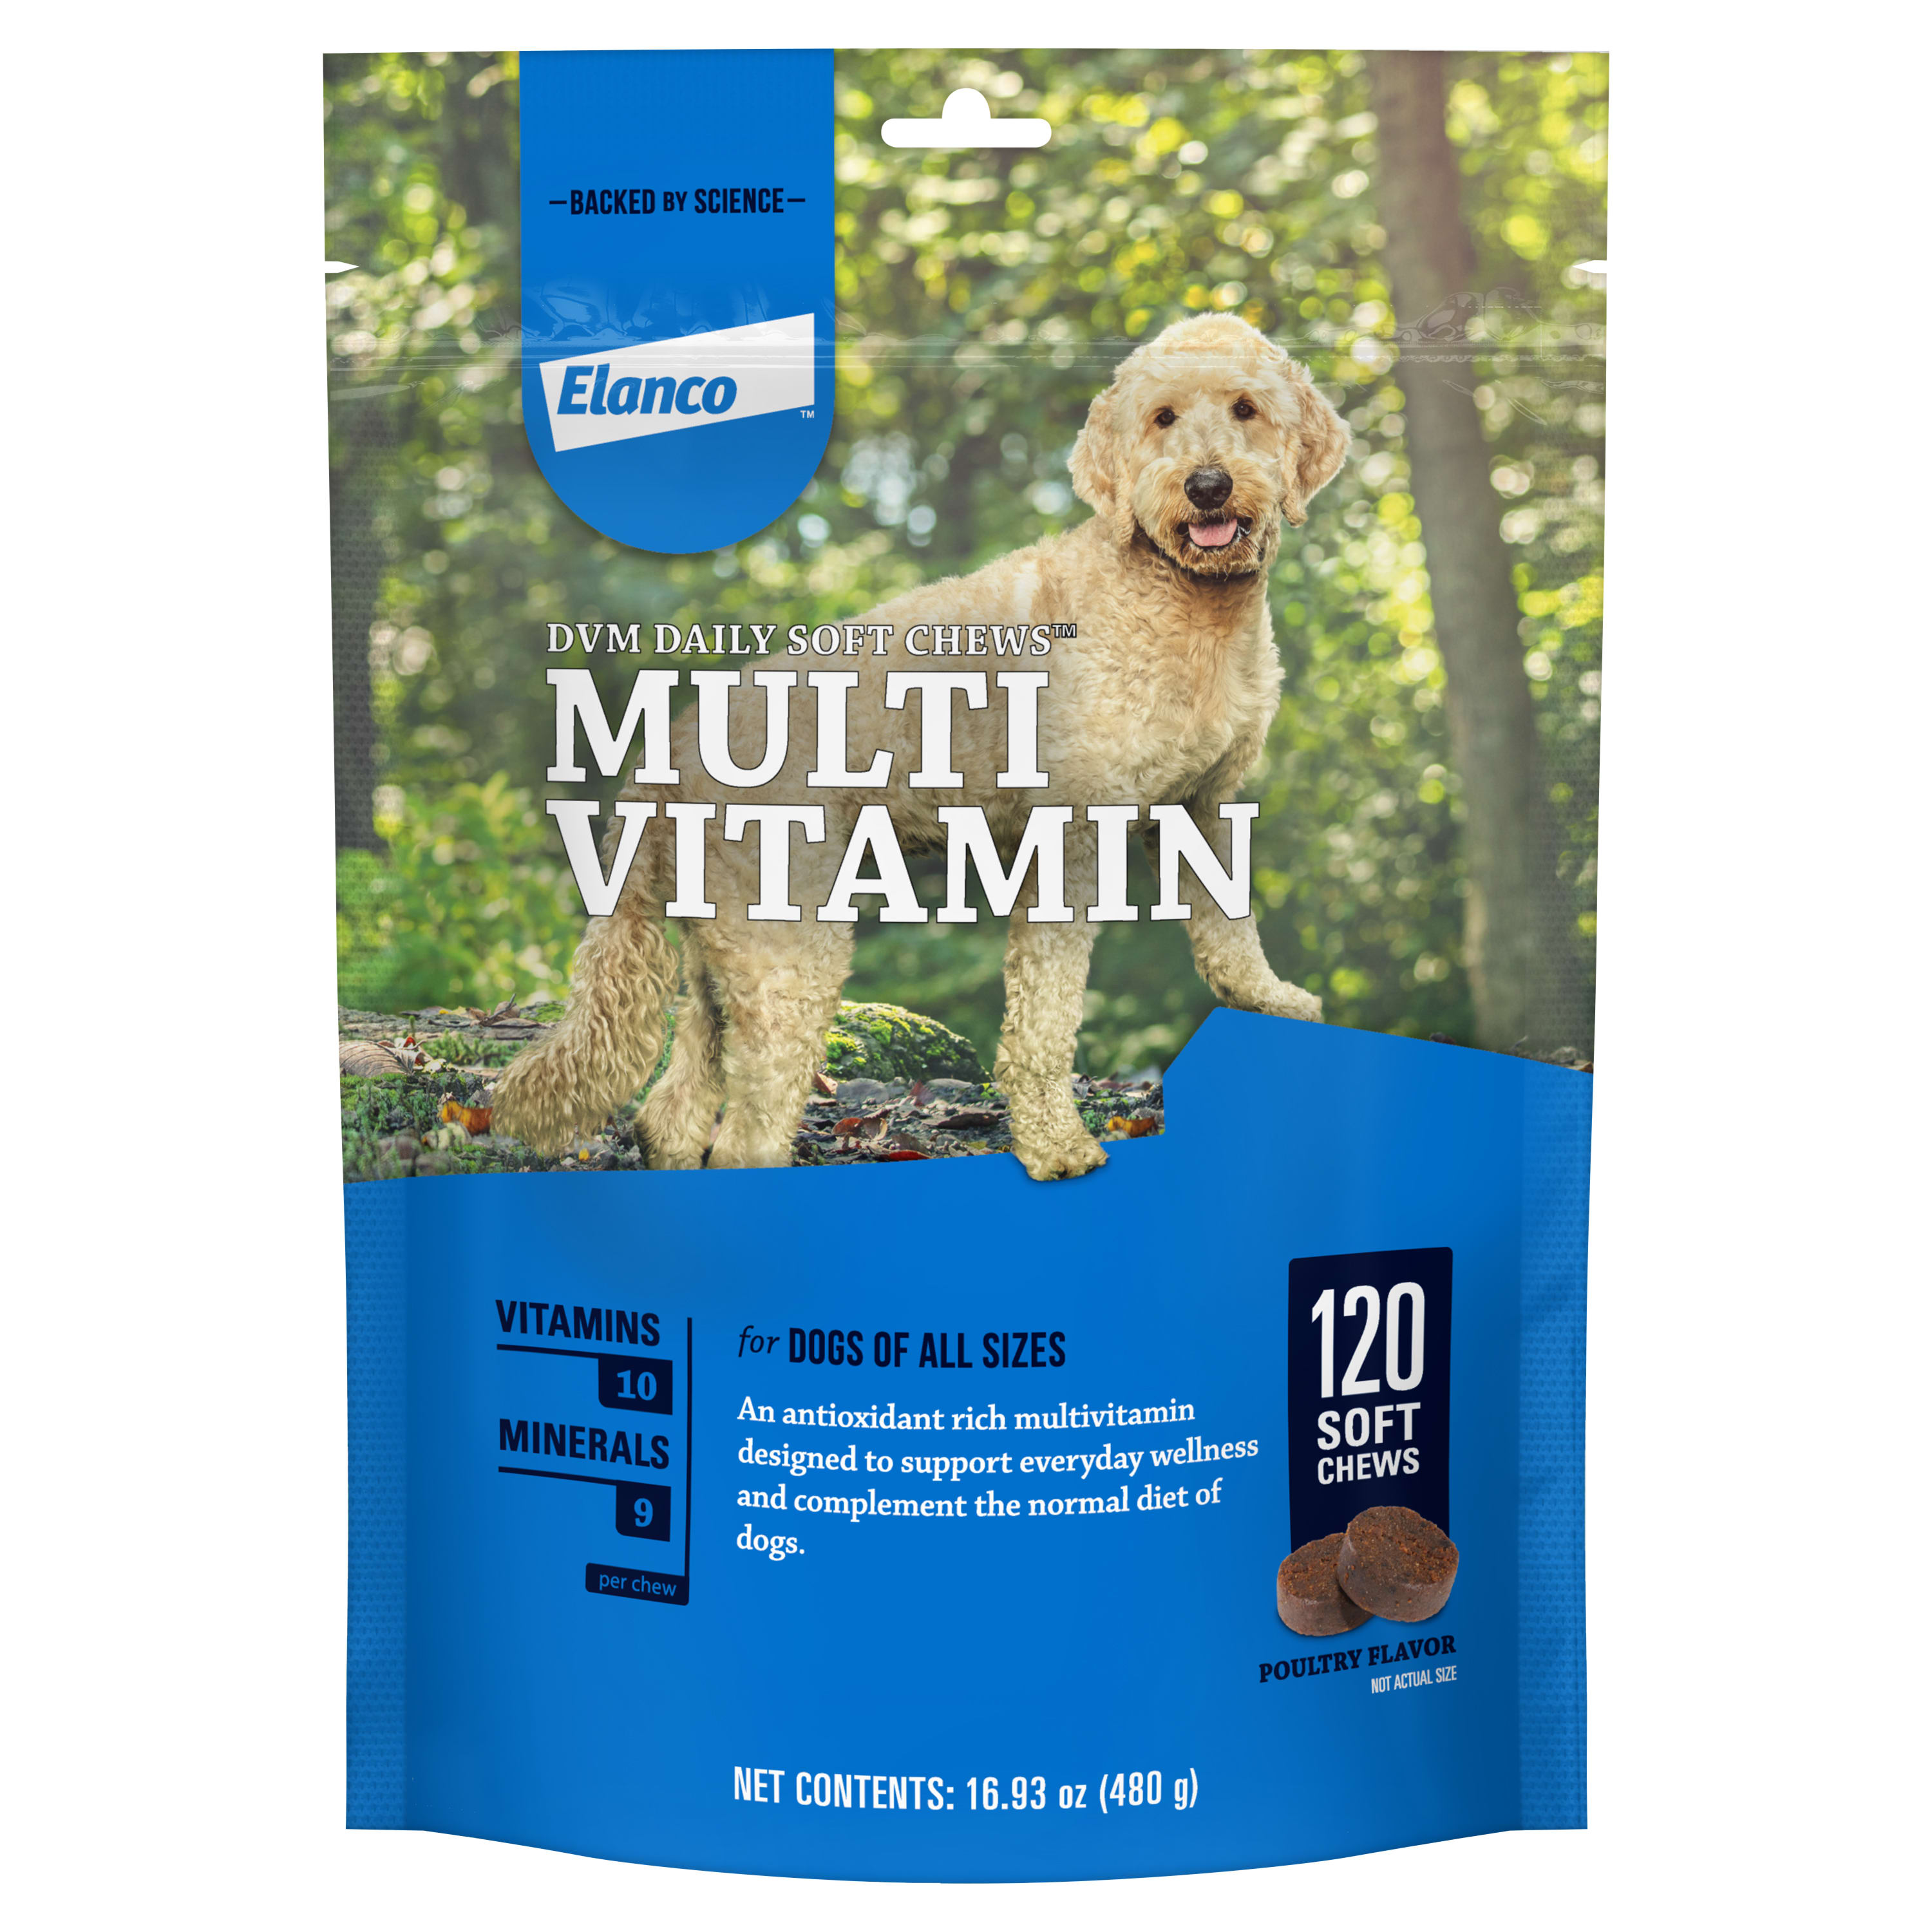 Elanco DVM Daily Soft Chews Multivitamin for Dogs